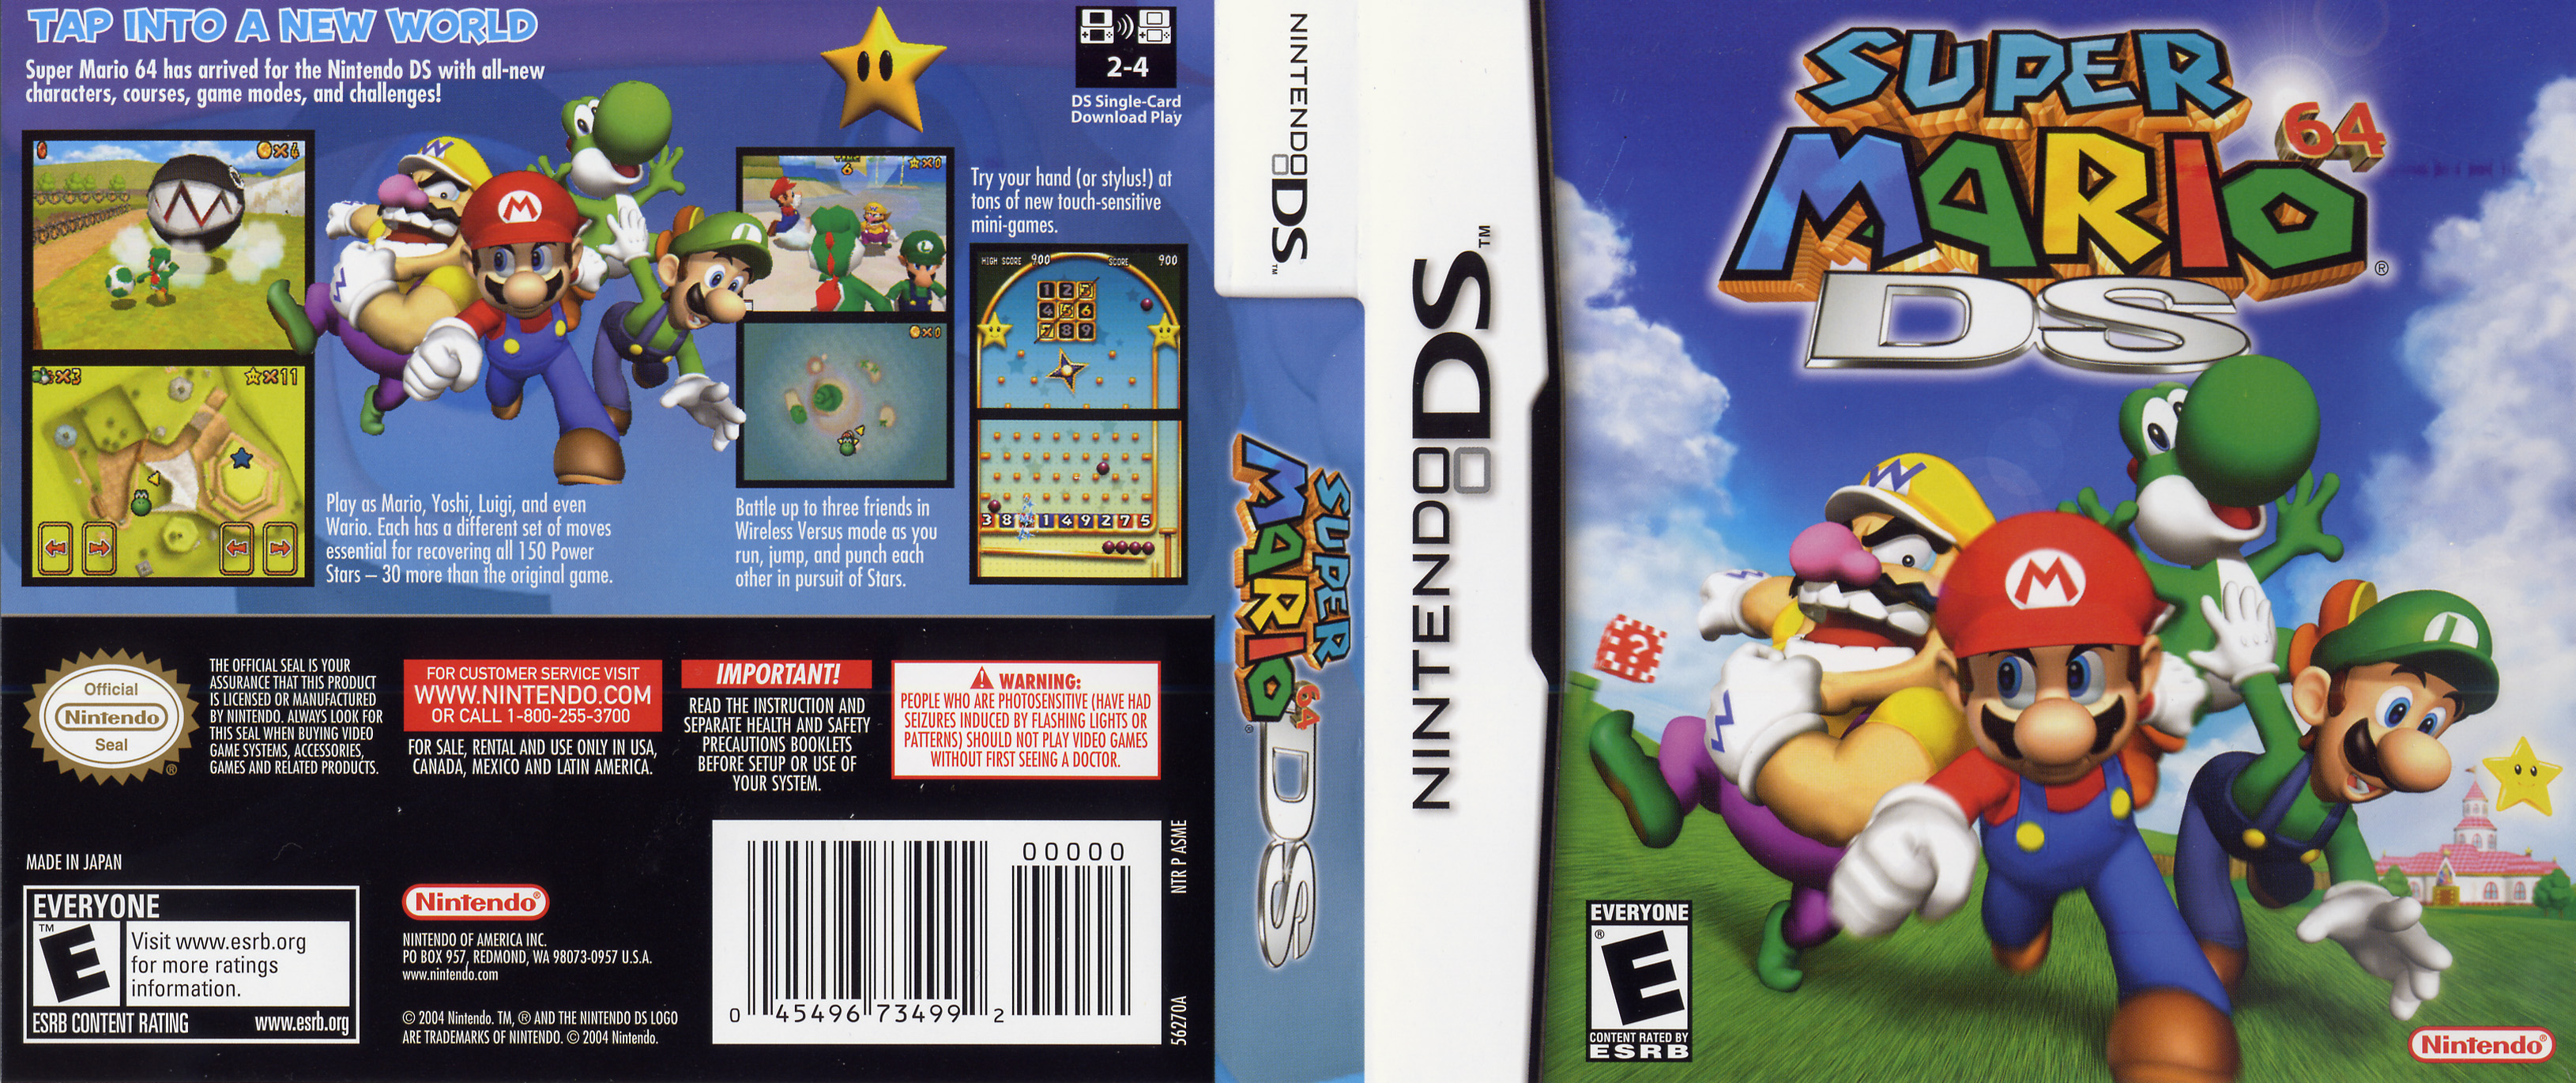 Super nintendo 64 игры. Nintendo DS super Mario 64 DS. Супер Марио 64 Нинтендо ДС. Nintendo 64 Mario 64 диск. New super Mario Bros. Нинтендо ДС.